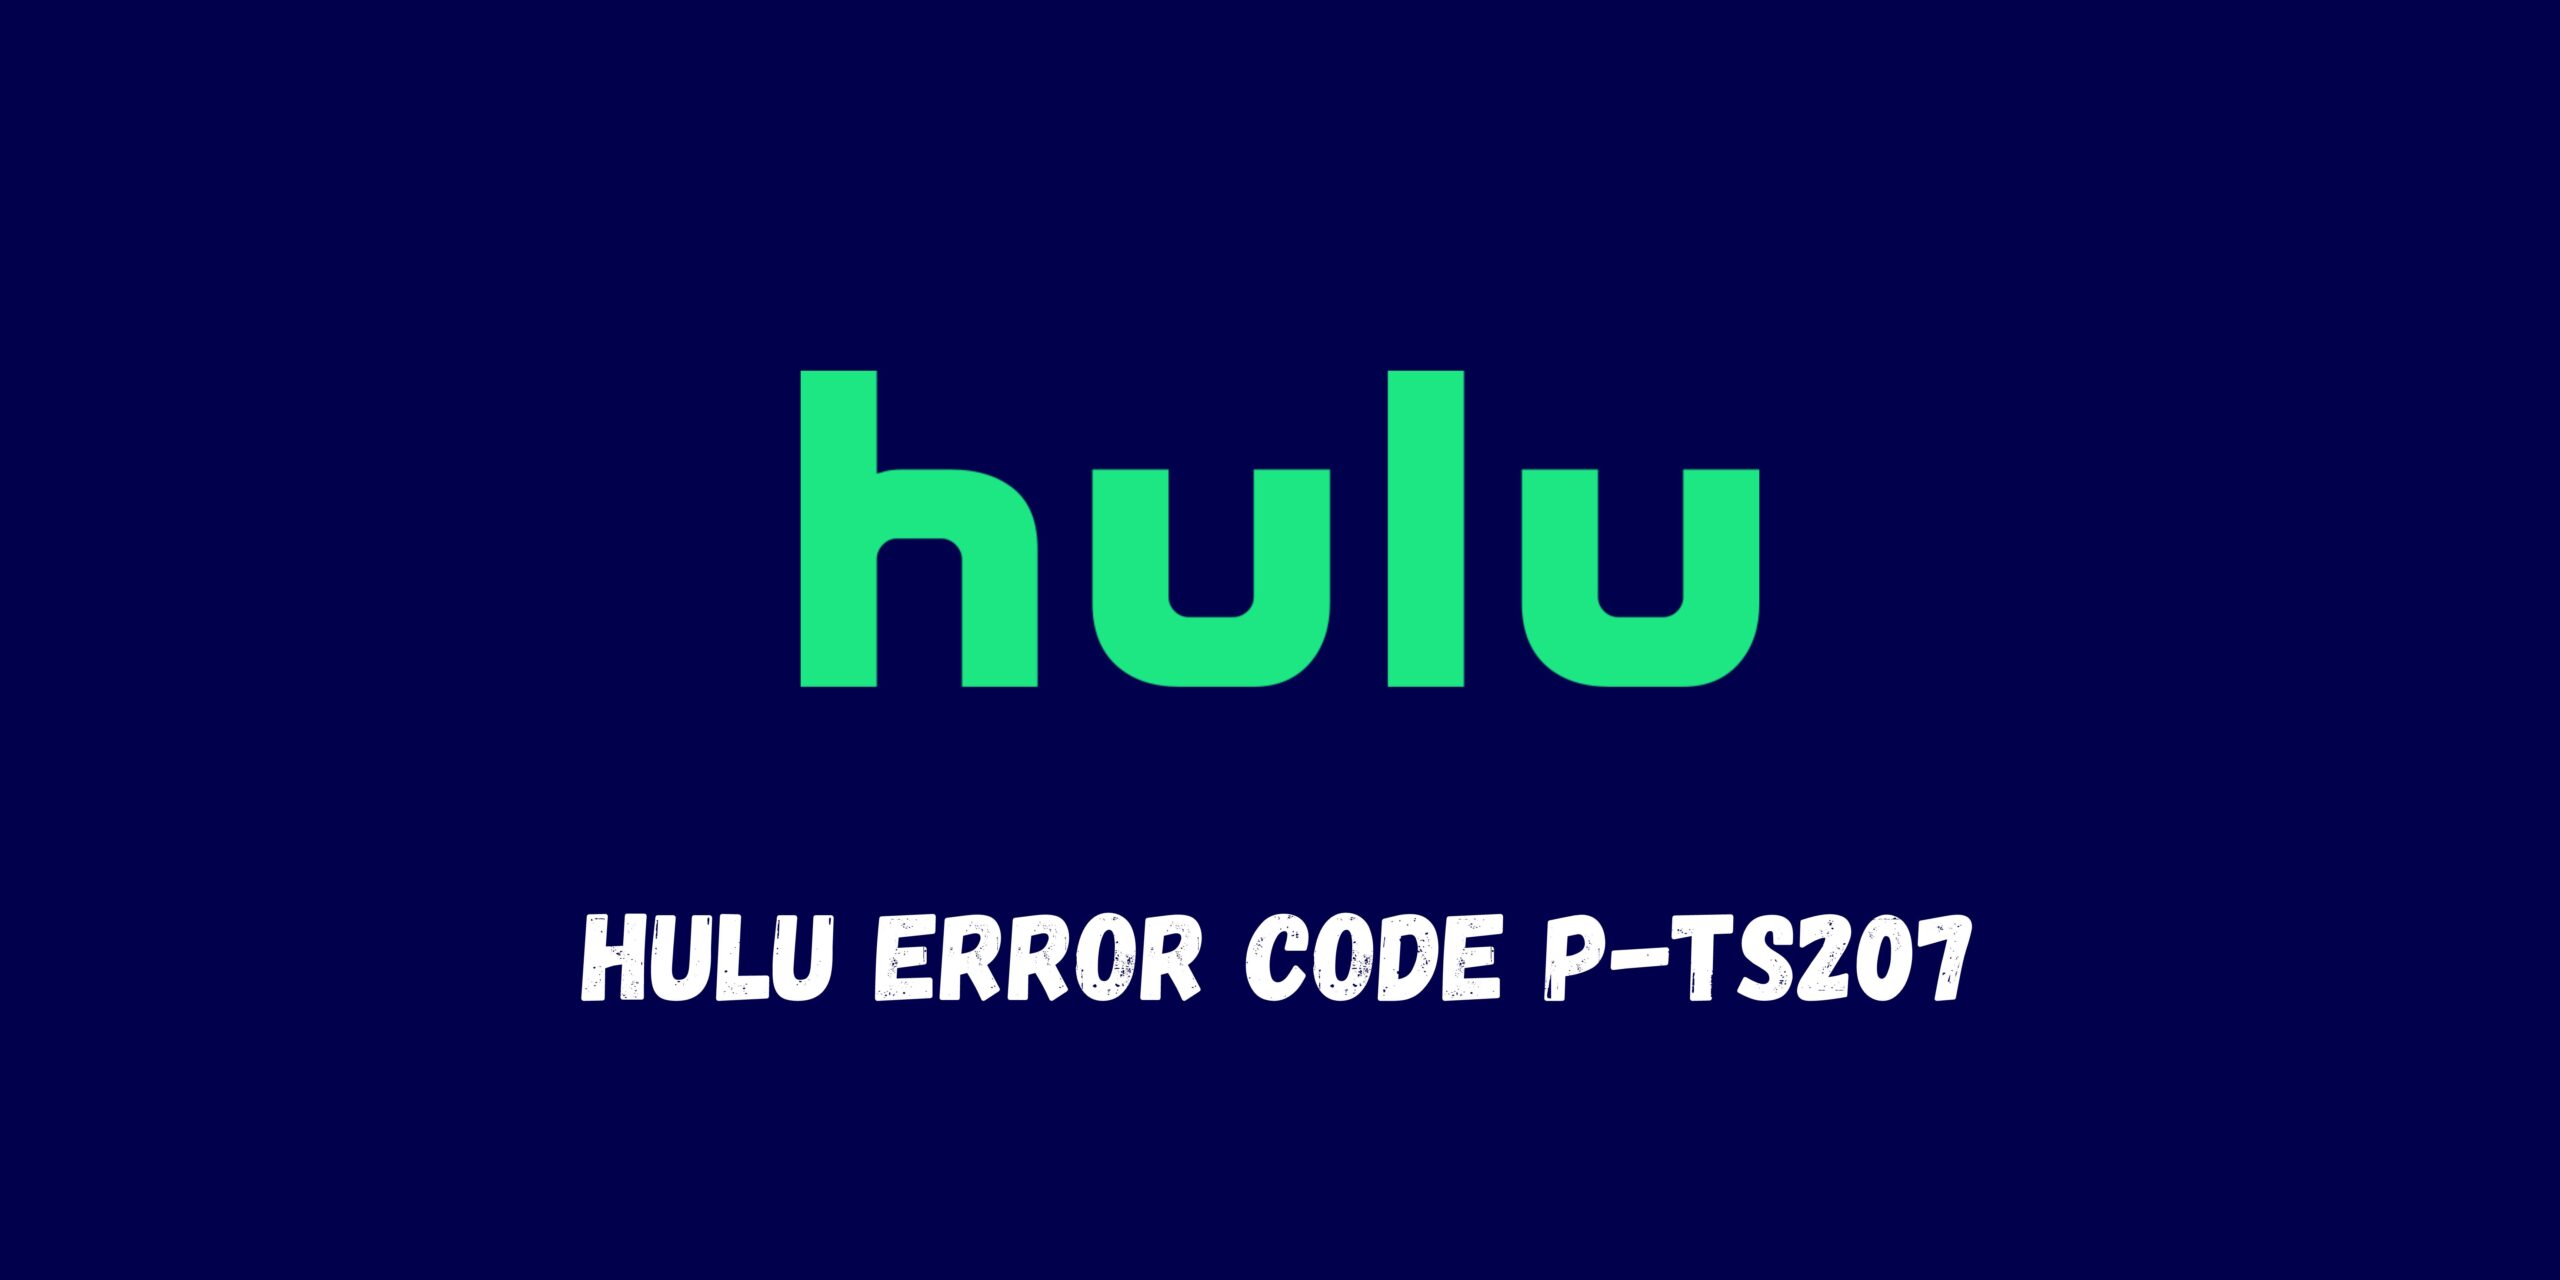 Hulu Error Code P-Ts207